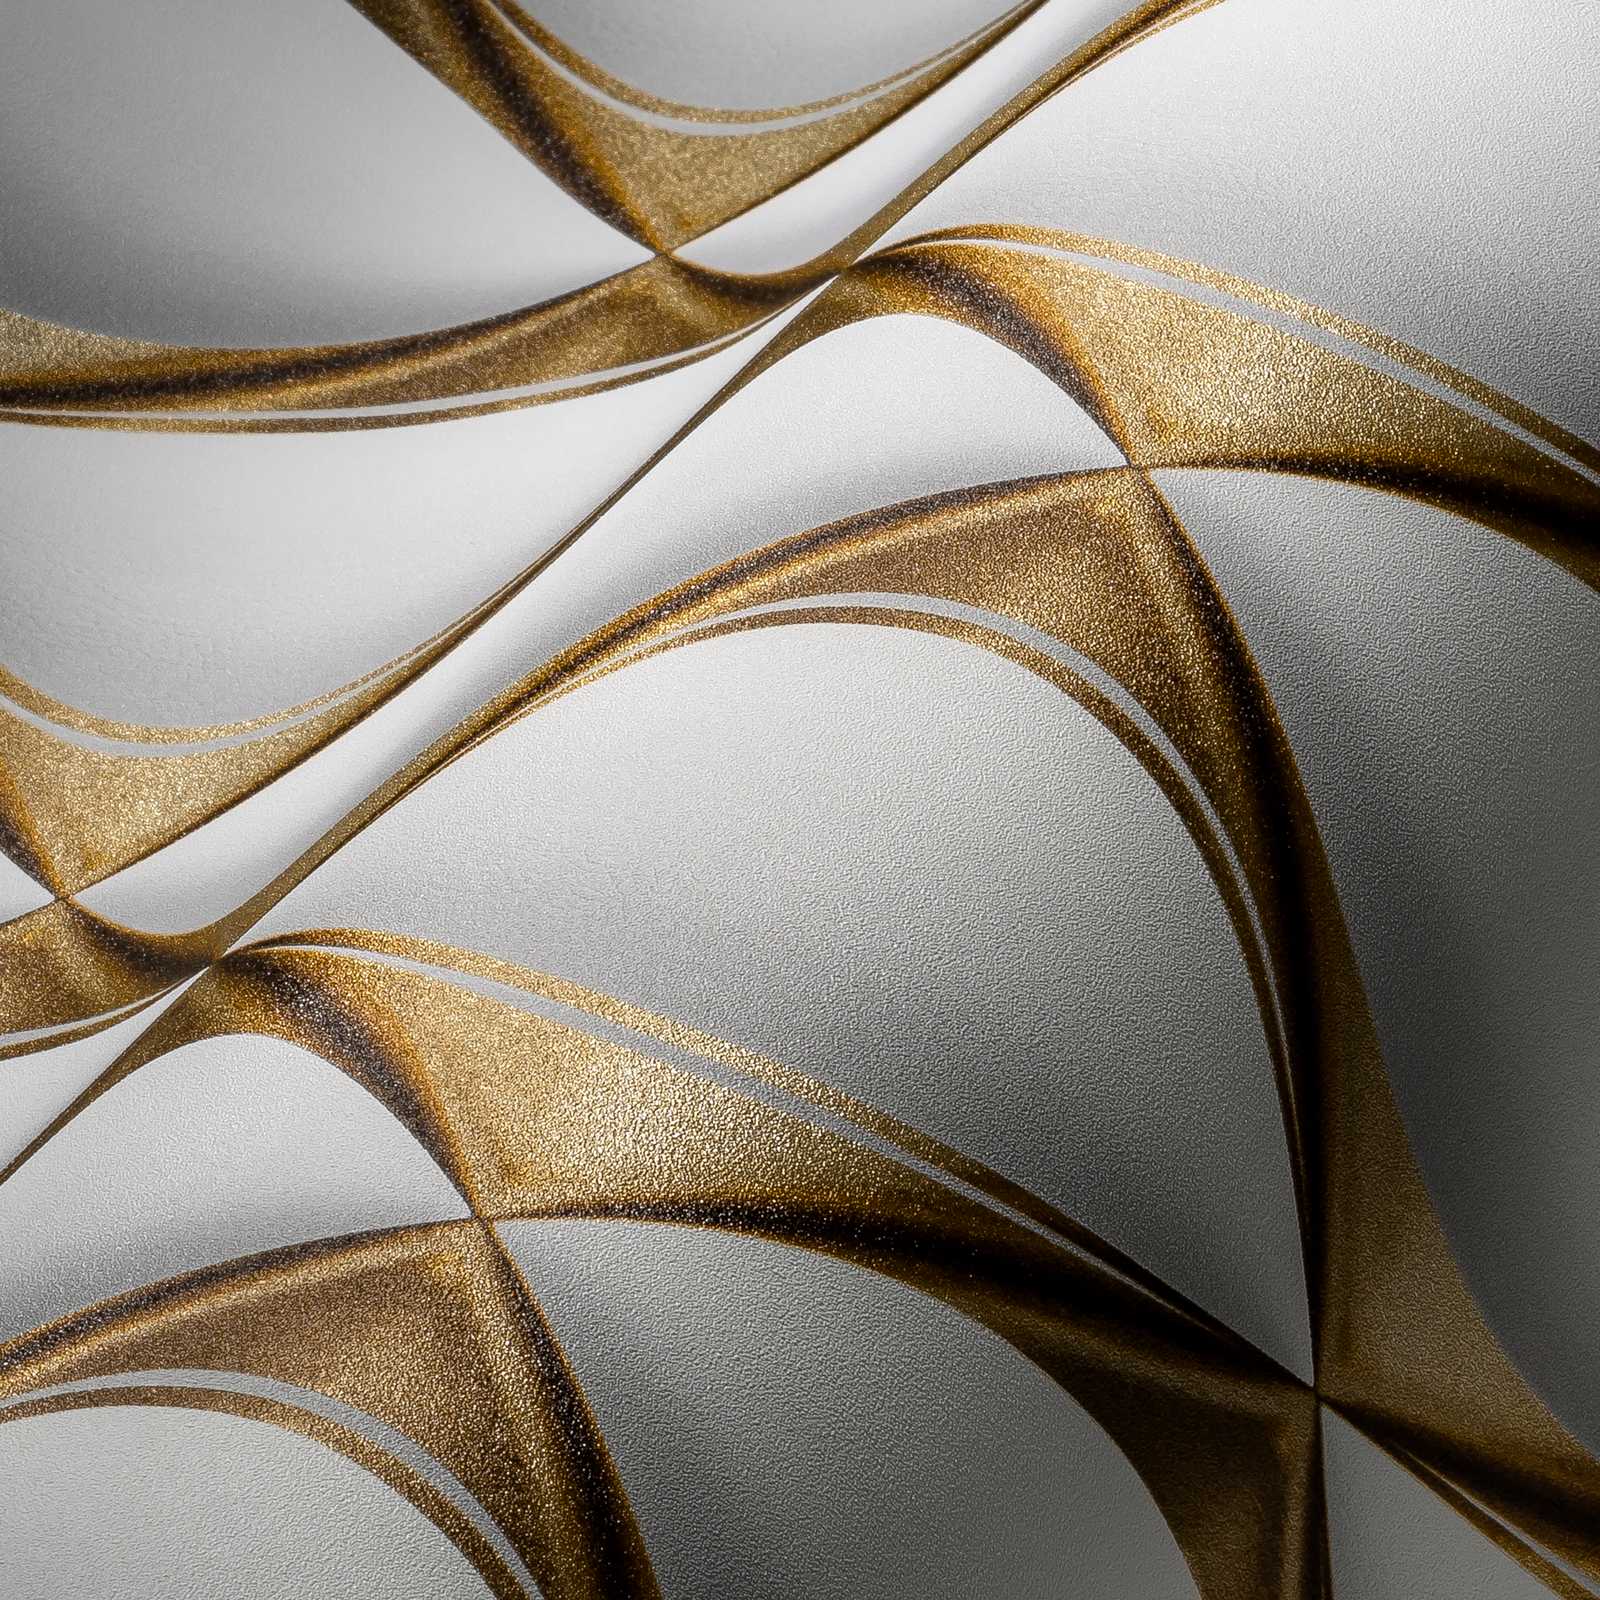             Papel pintado 3D patrón retro dorado - blanco, gris, metálico
        